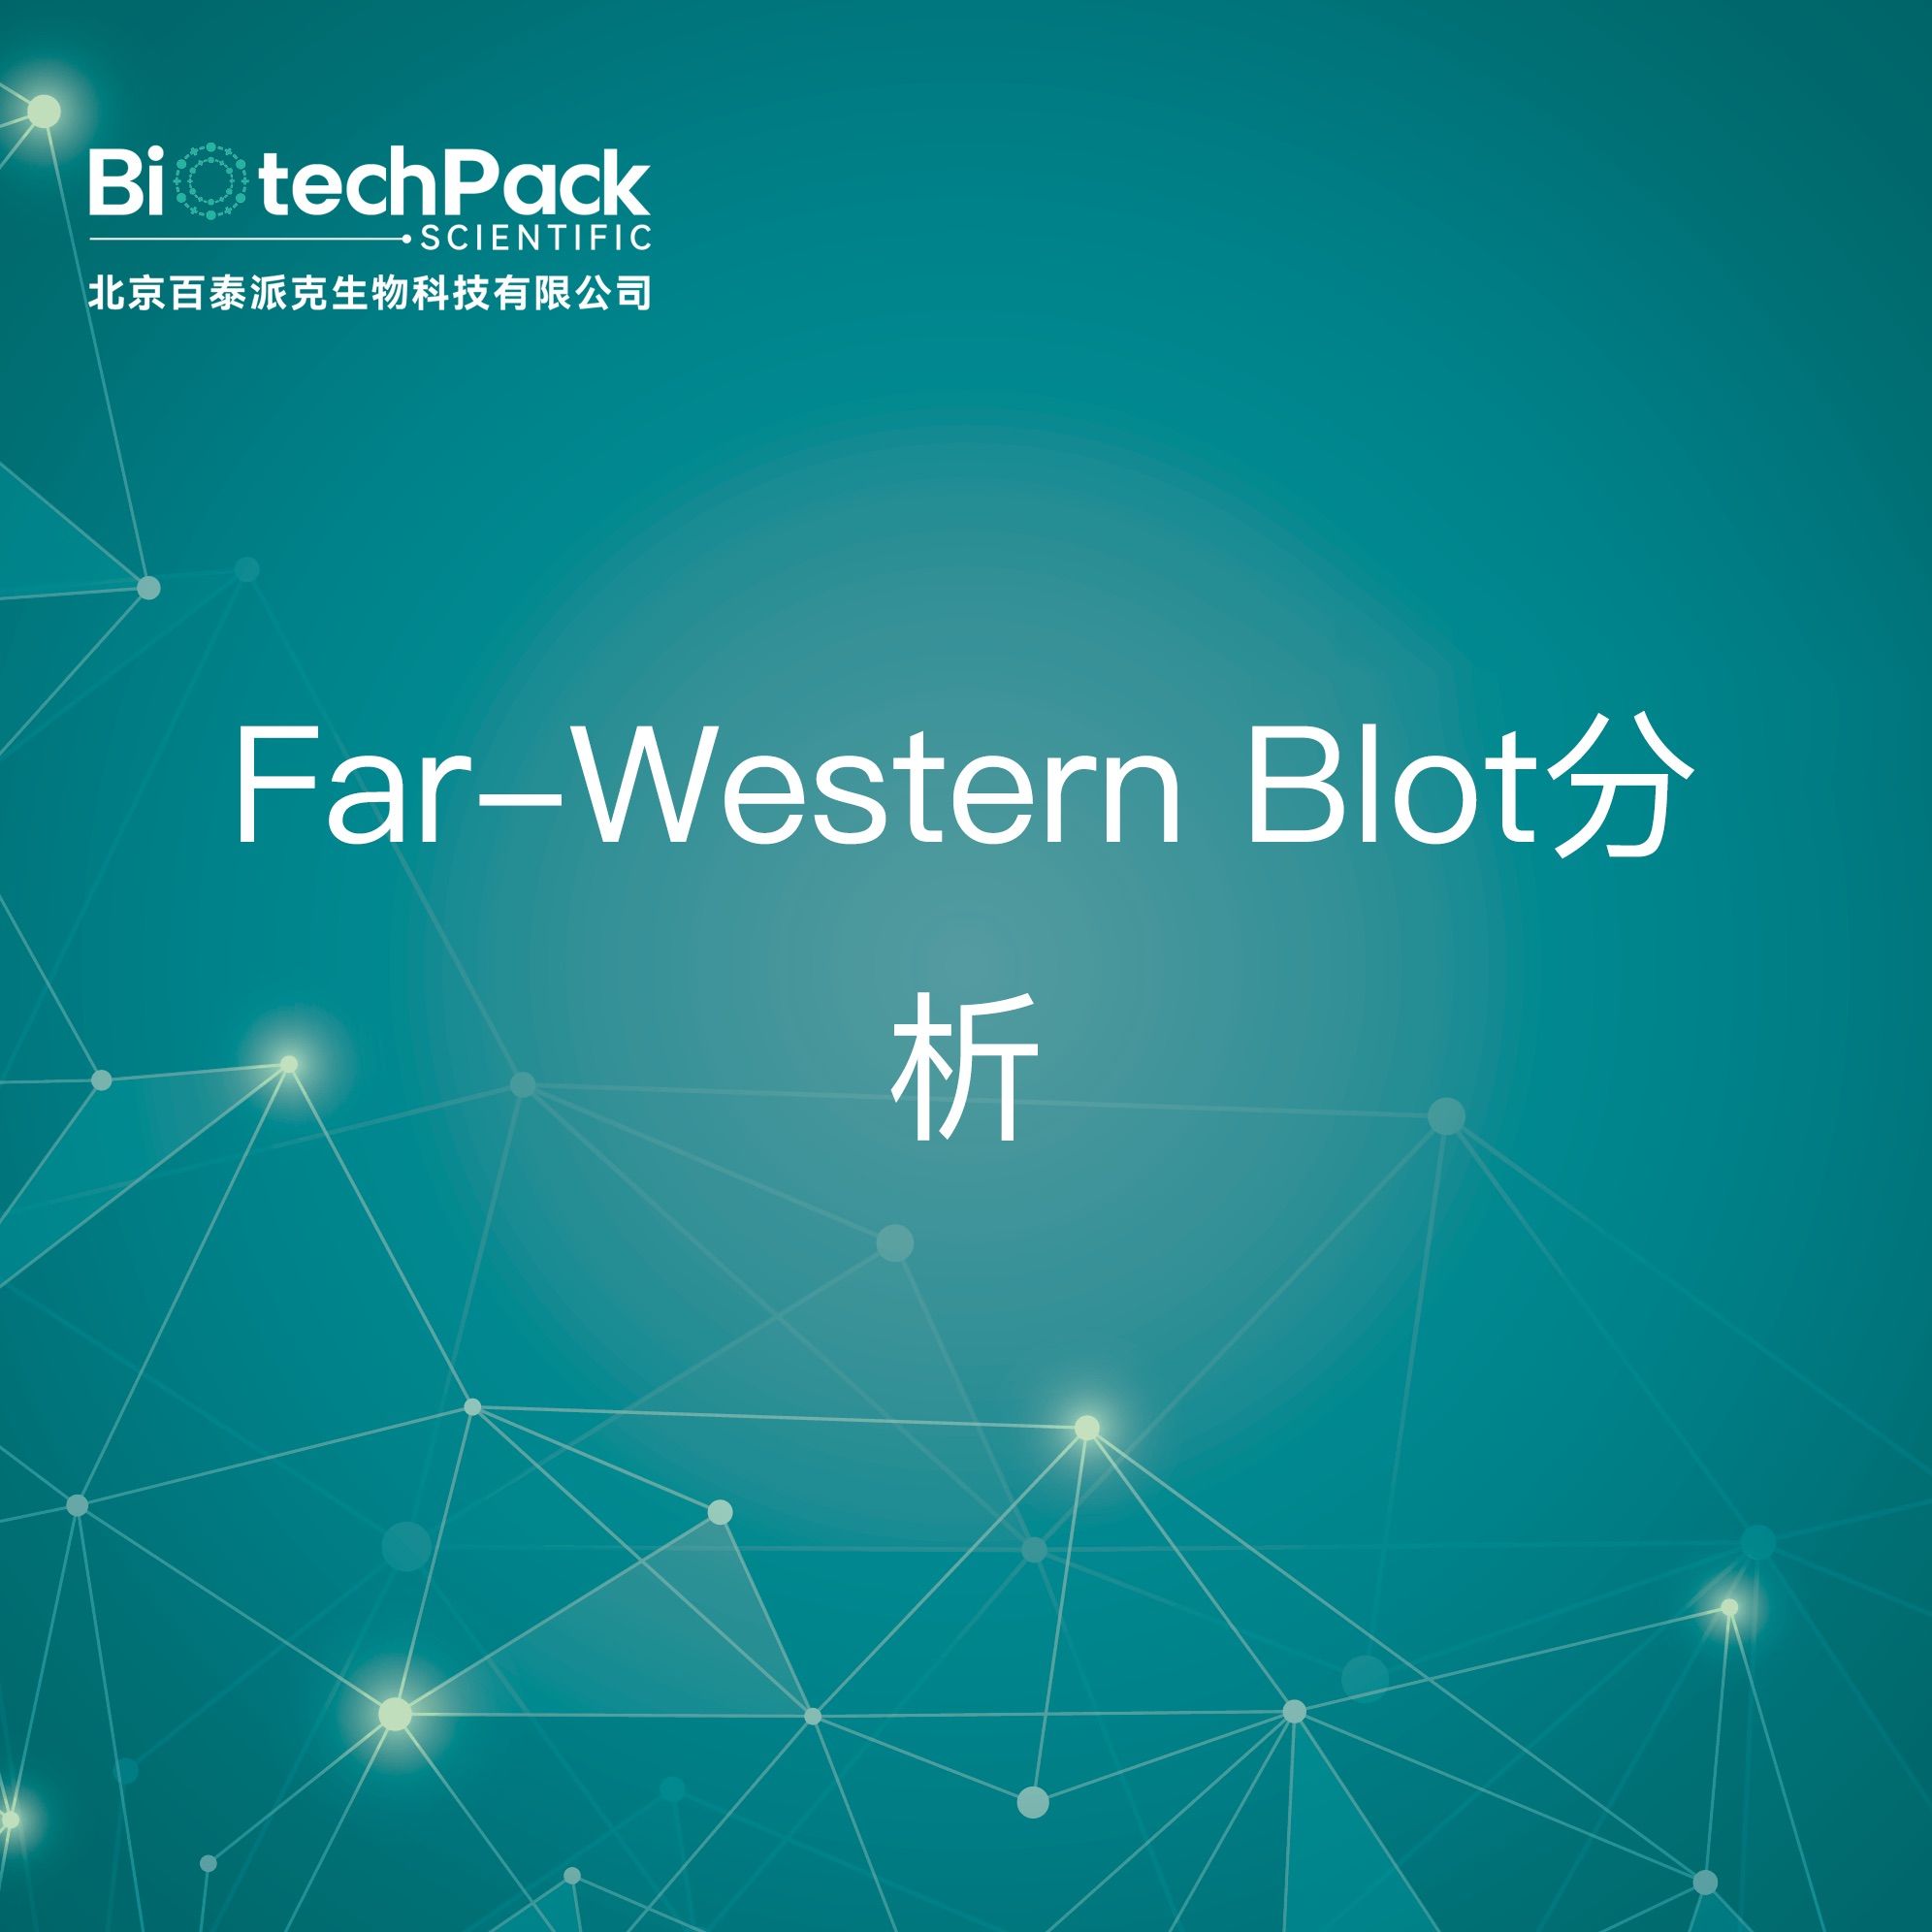 Far-Western Blot分析检测技术服务